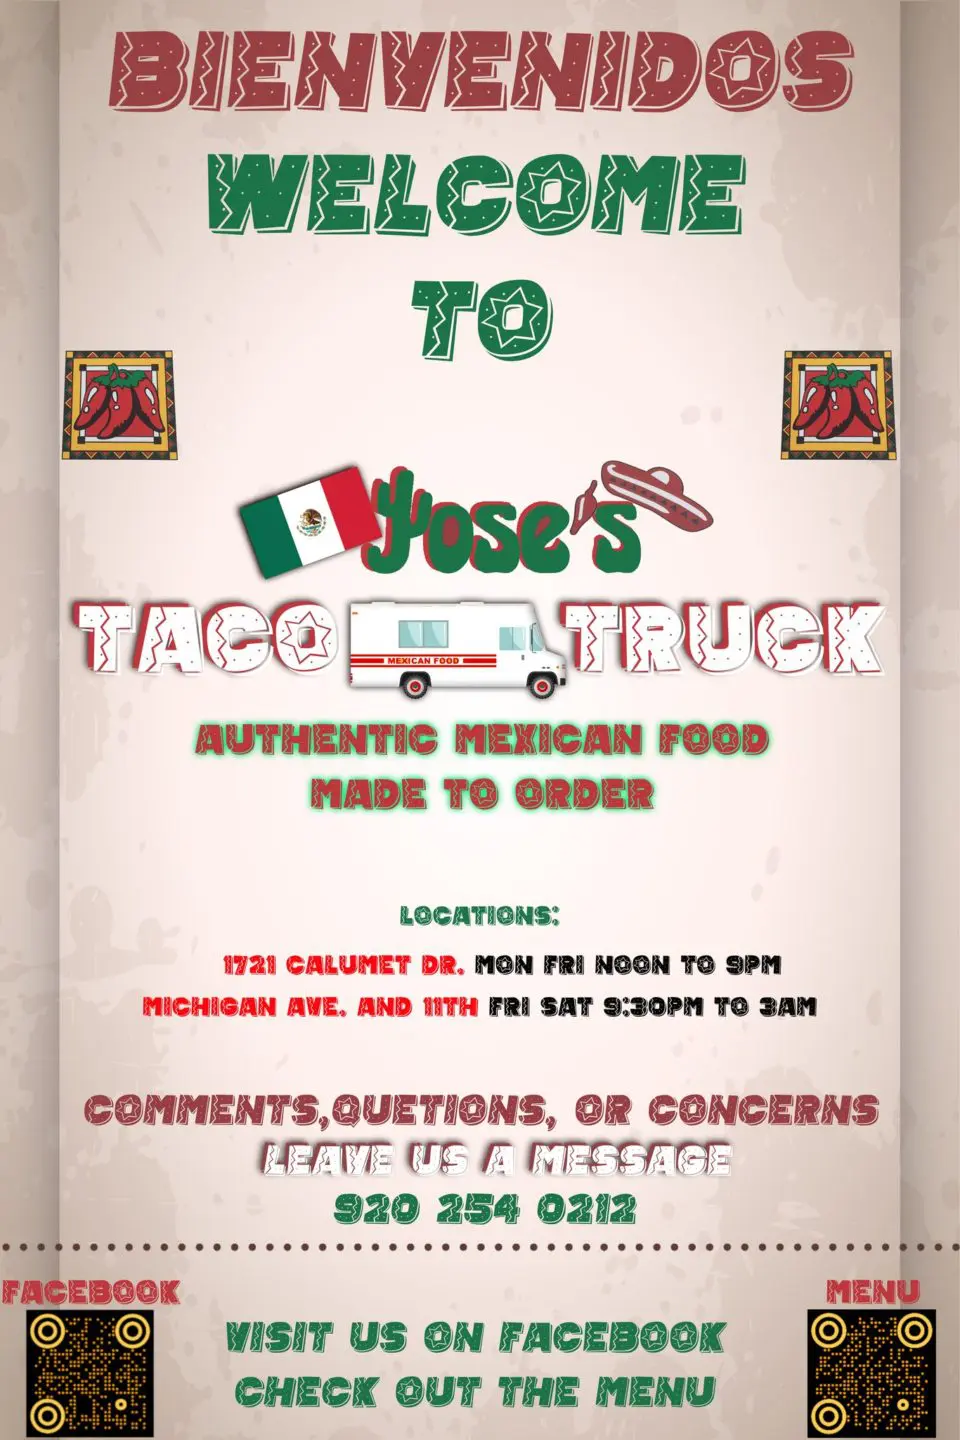 Jose’s Taco Truck